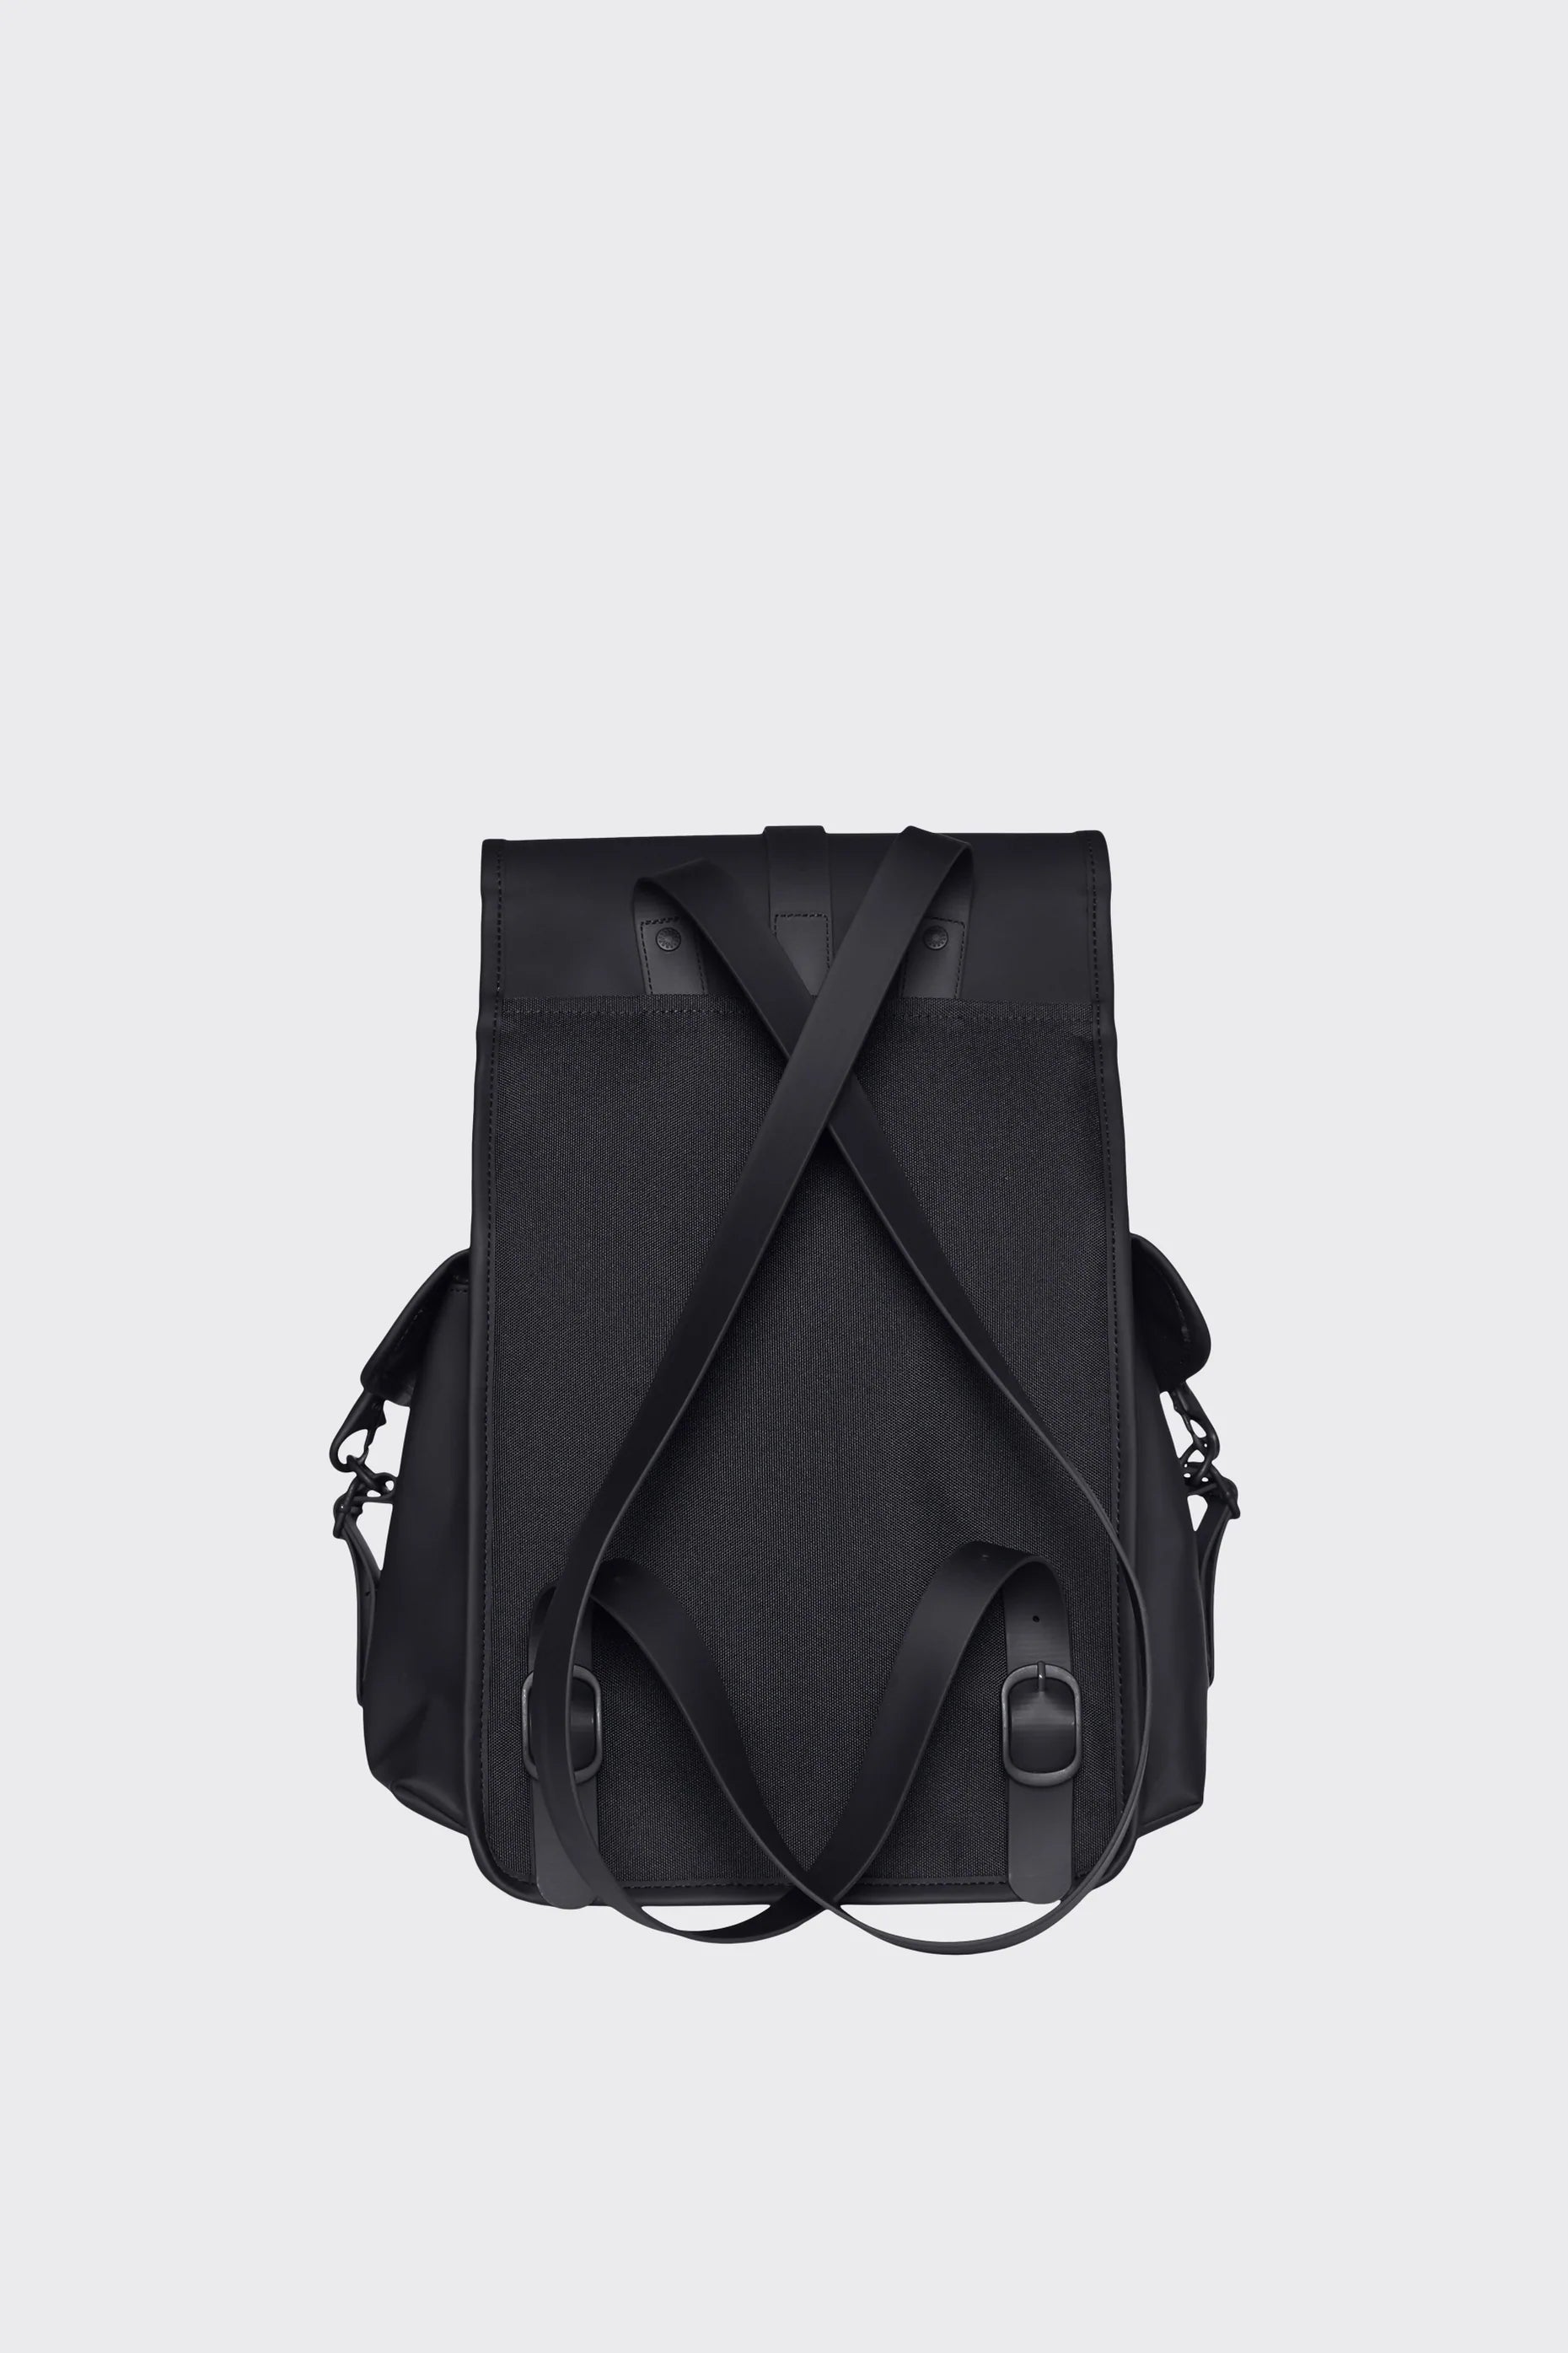 Classic Waterproof Laptop Bag/Backpack for Men, 35ltr – Laptop Techy